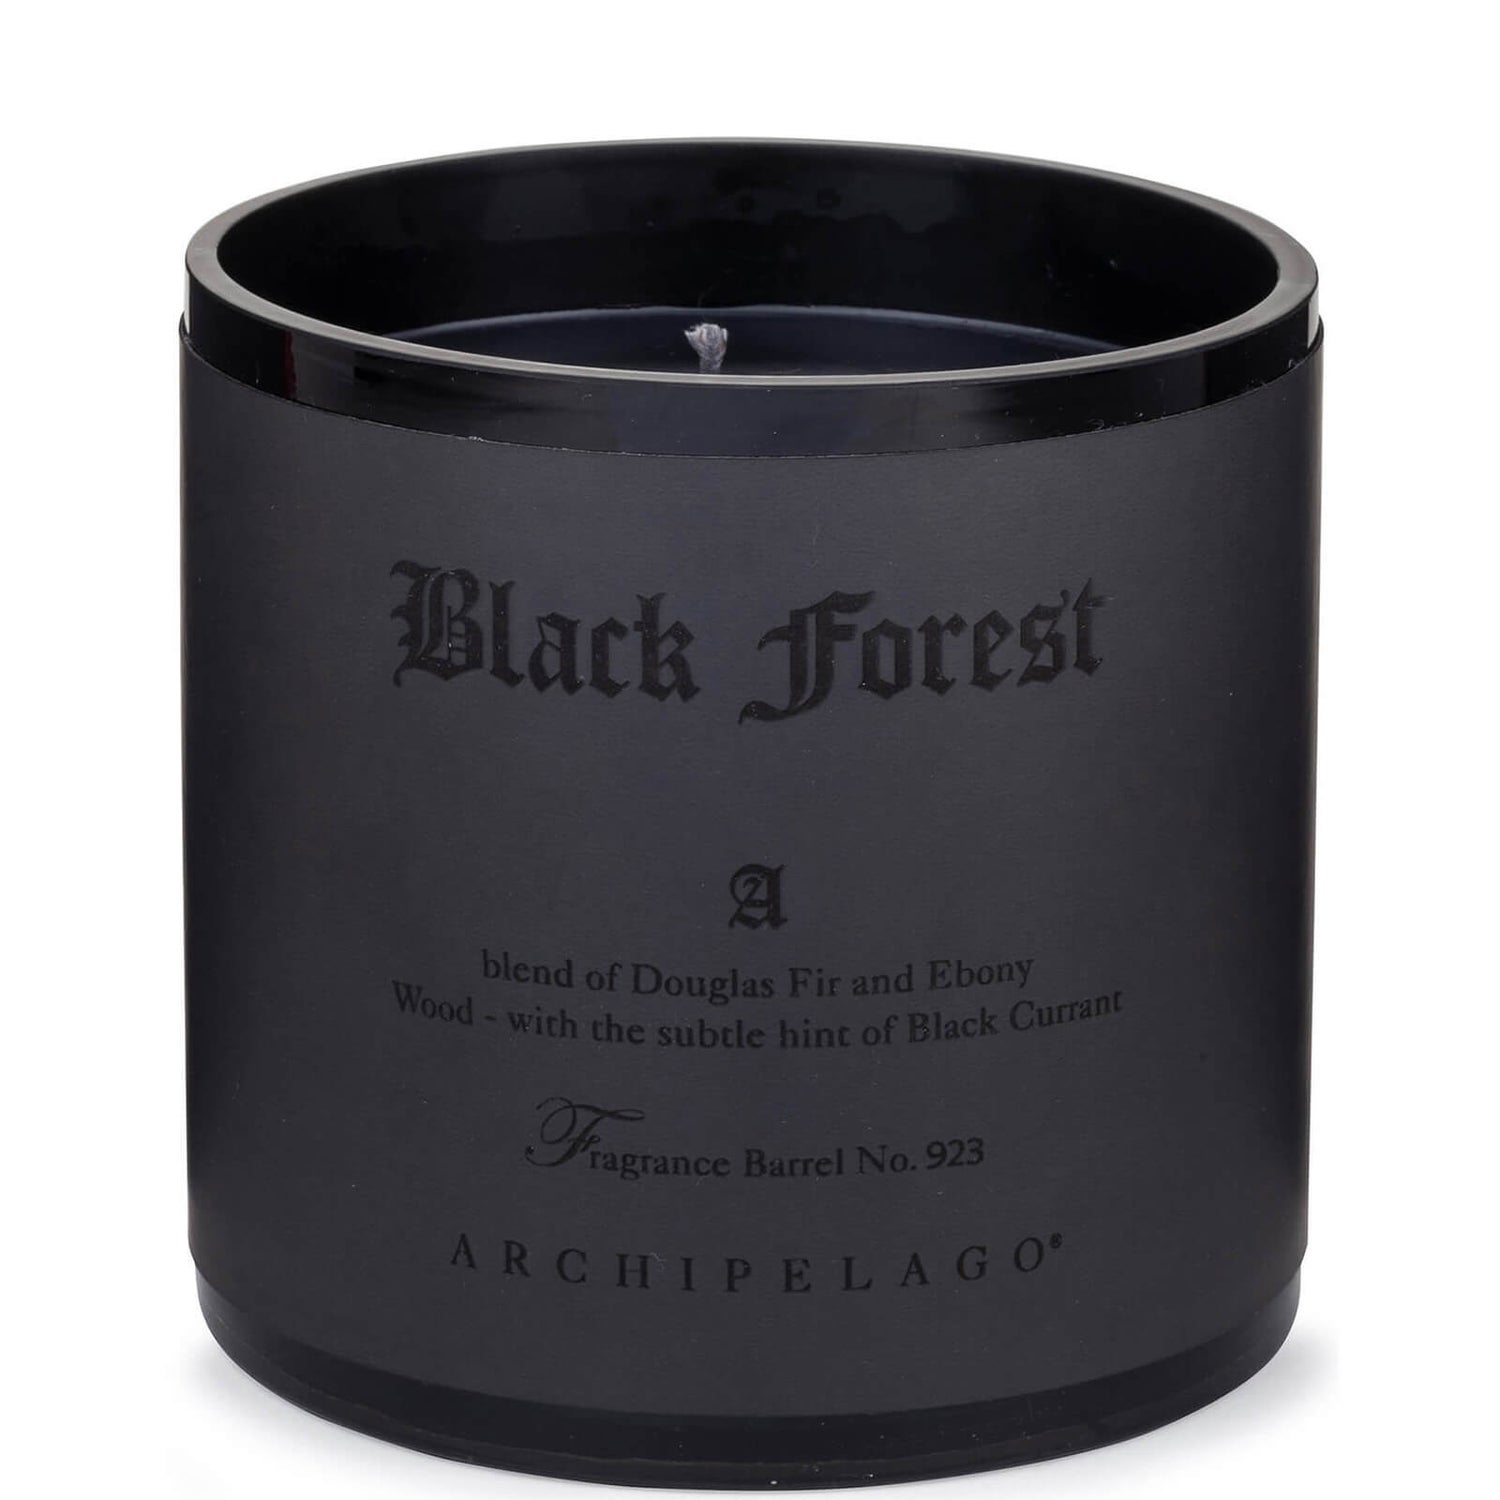 Archipelago Botanicals XL 3 Wick Black Forest Candle 1630g Exclusive